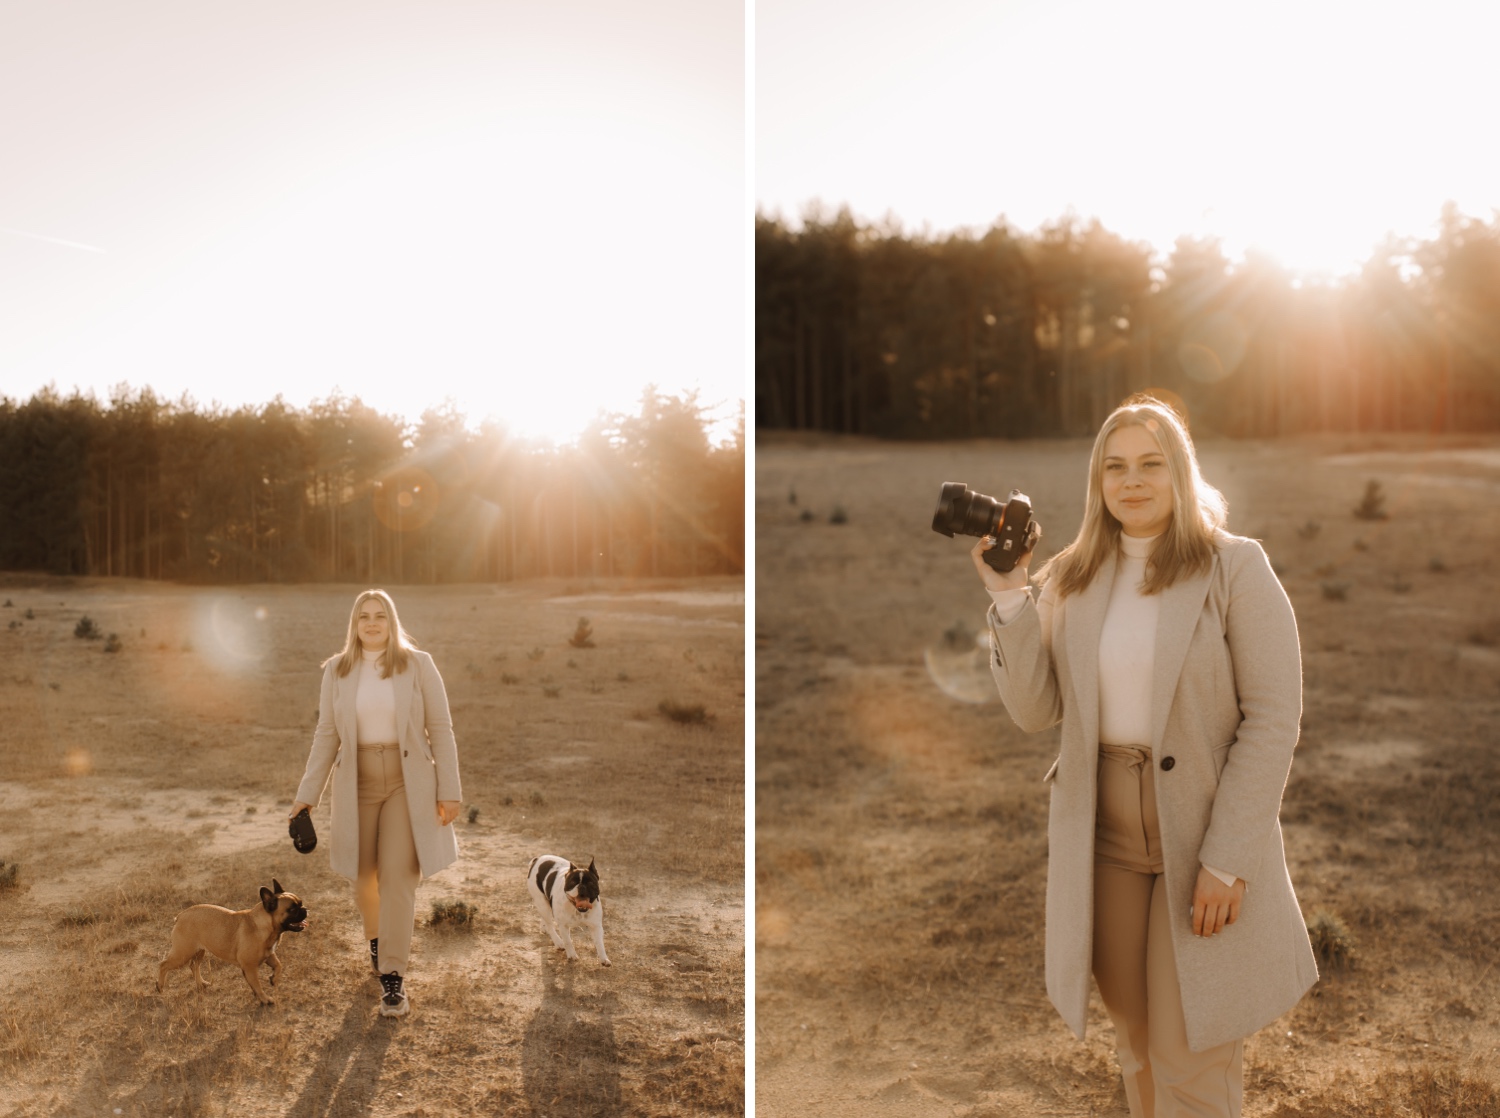 businessfotograaf limburg - Nederlandse fotografe poseert met haar camera in de Lommelse sahara